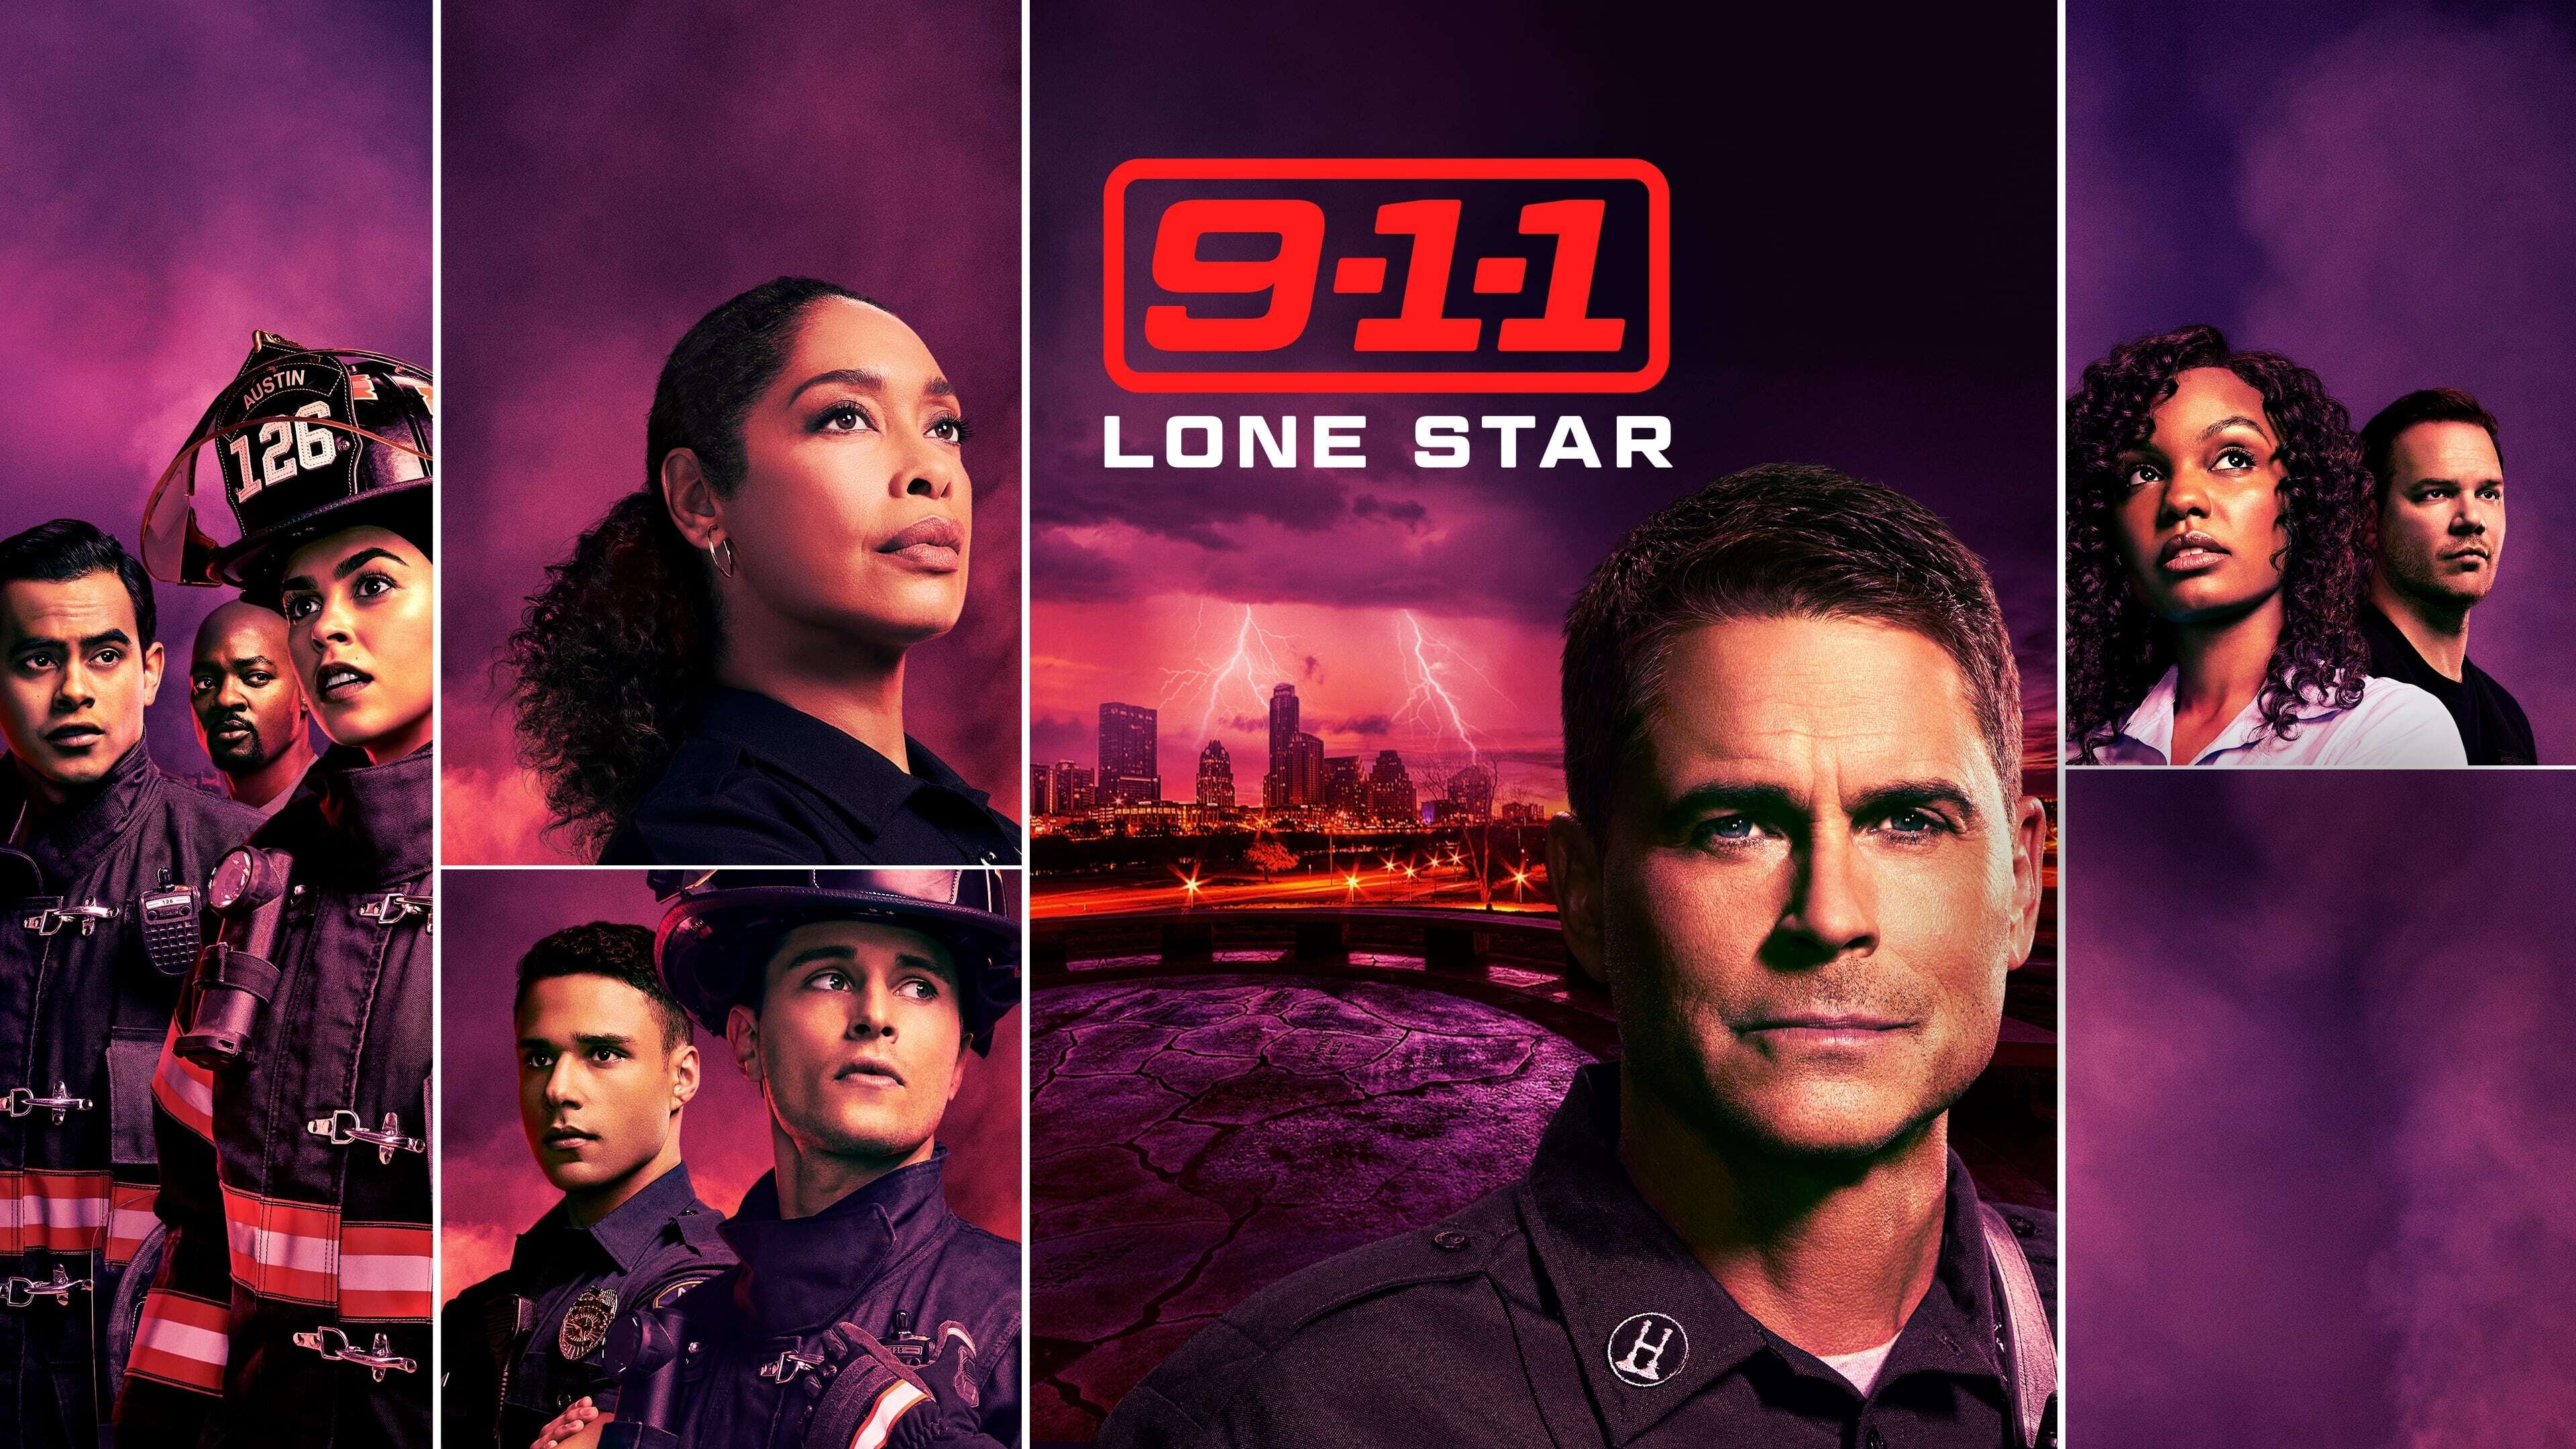 【911 Lone Star 2x01 】Online Sub Español | 【PELISPLUS】- Ver películas y - Streaming 911 Lone Star